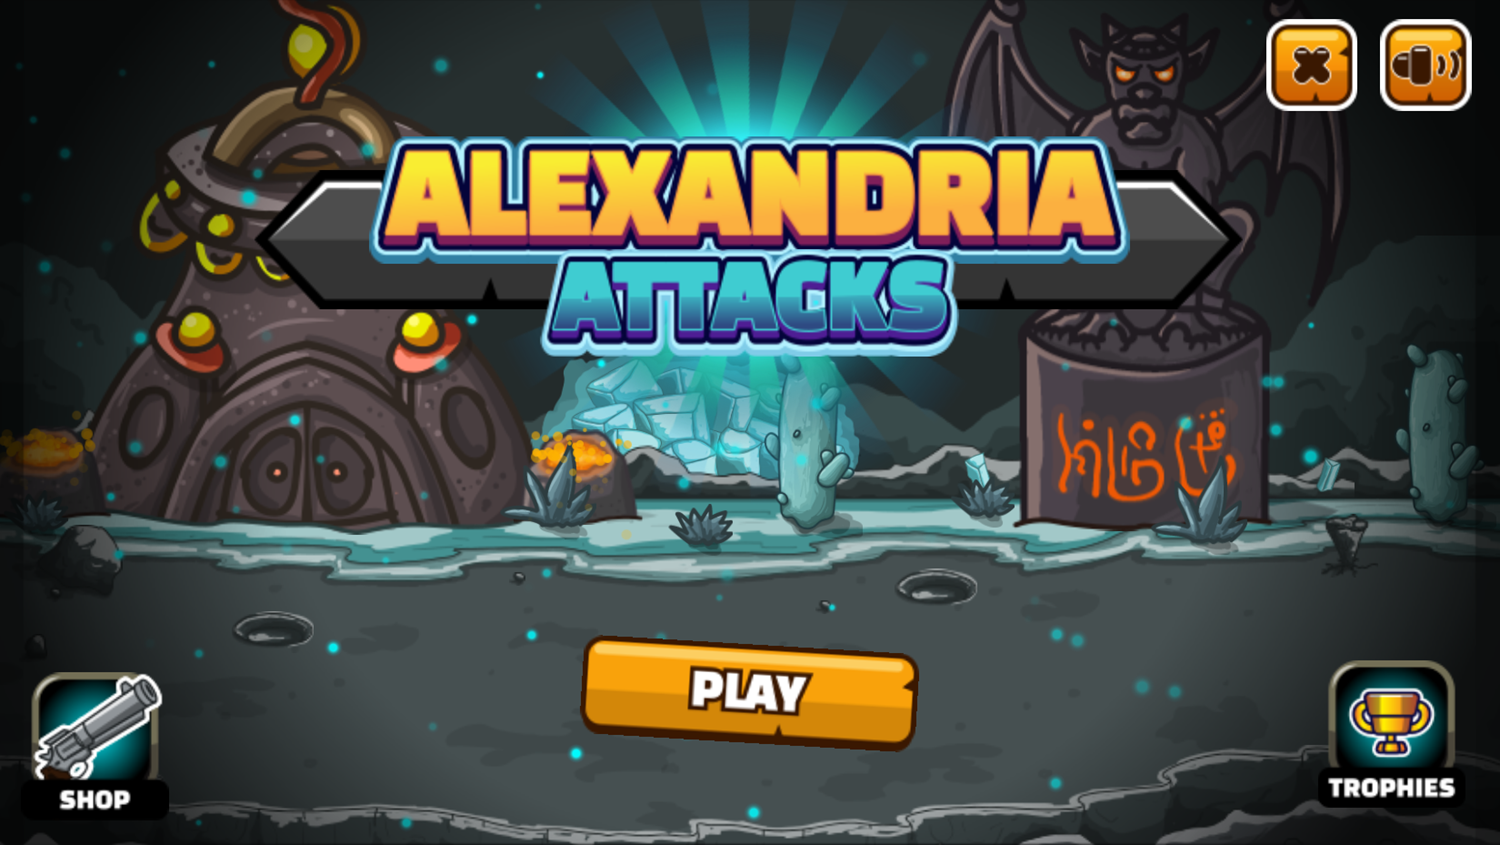 Alexandria Attacks Game Welcome Screen Screenshot.